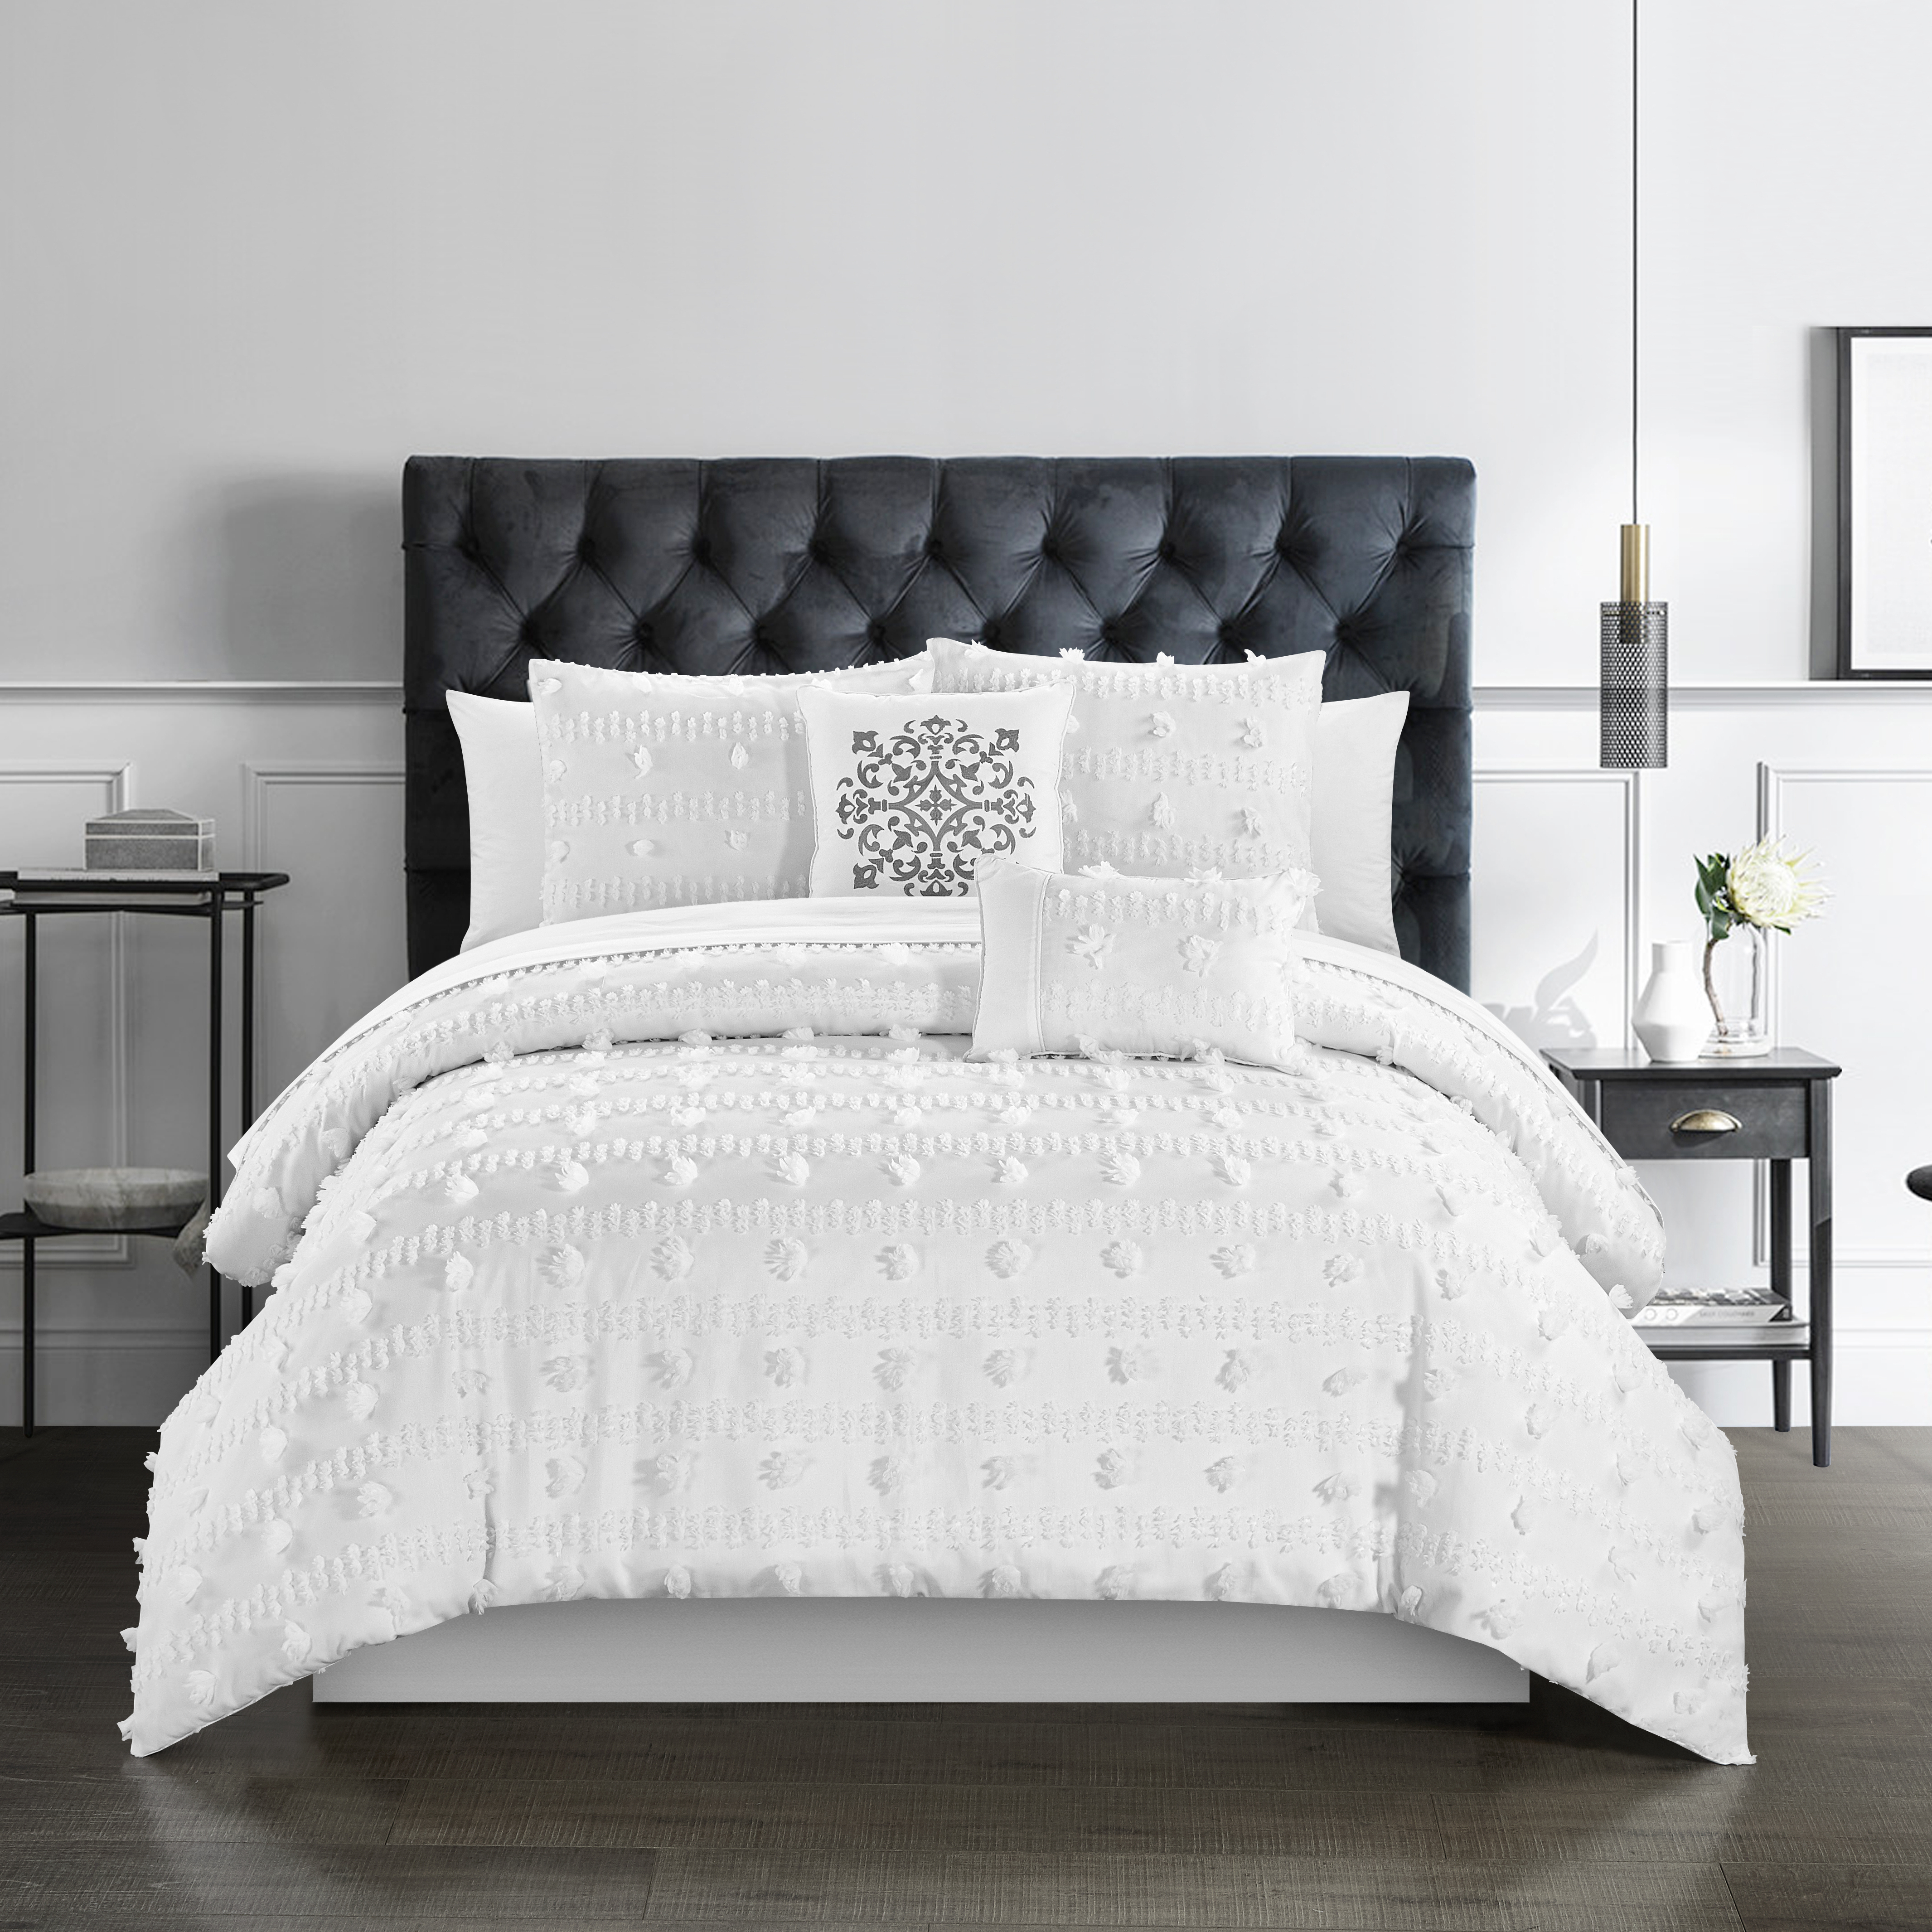 Ahtisa 5 Piece Comforter Set Jacquard Floral Applique Design Bedding - Grey, Queen